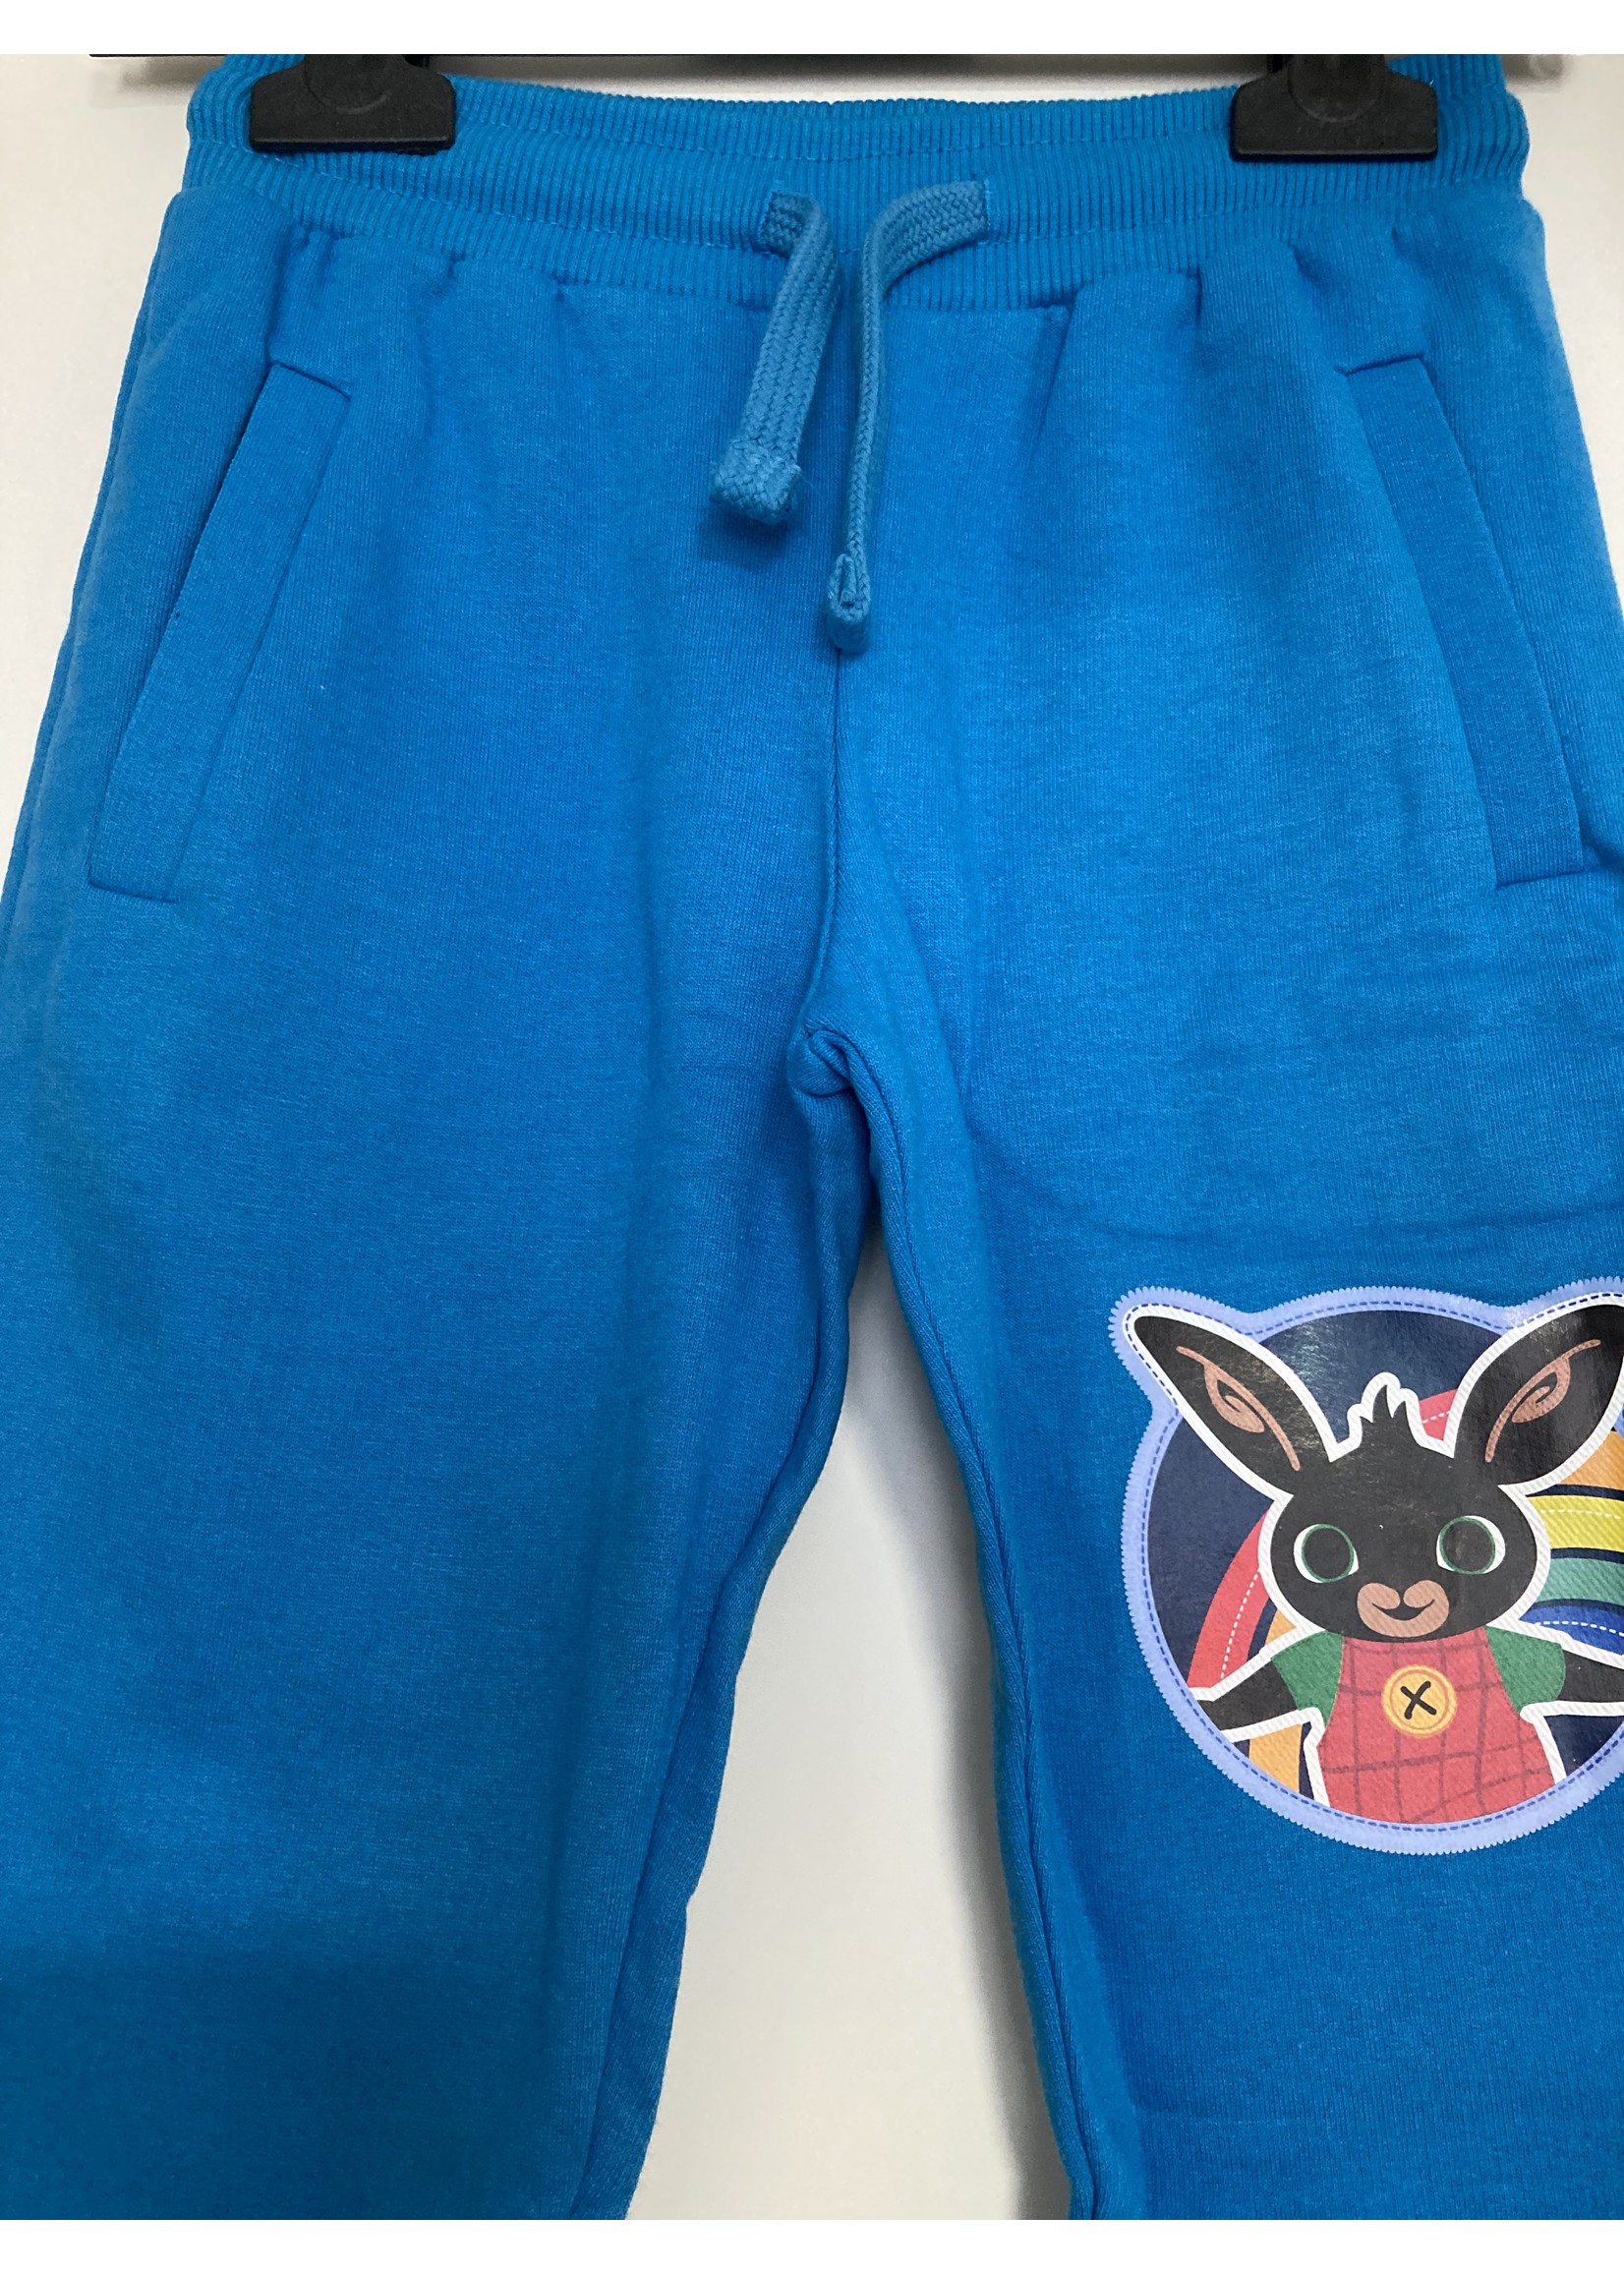 Bing Bunny Bing sweatpants from BING blue